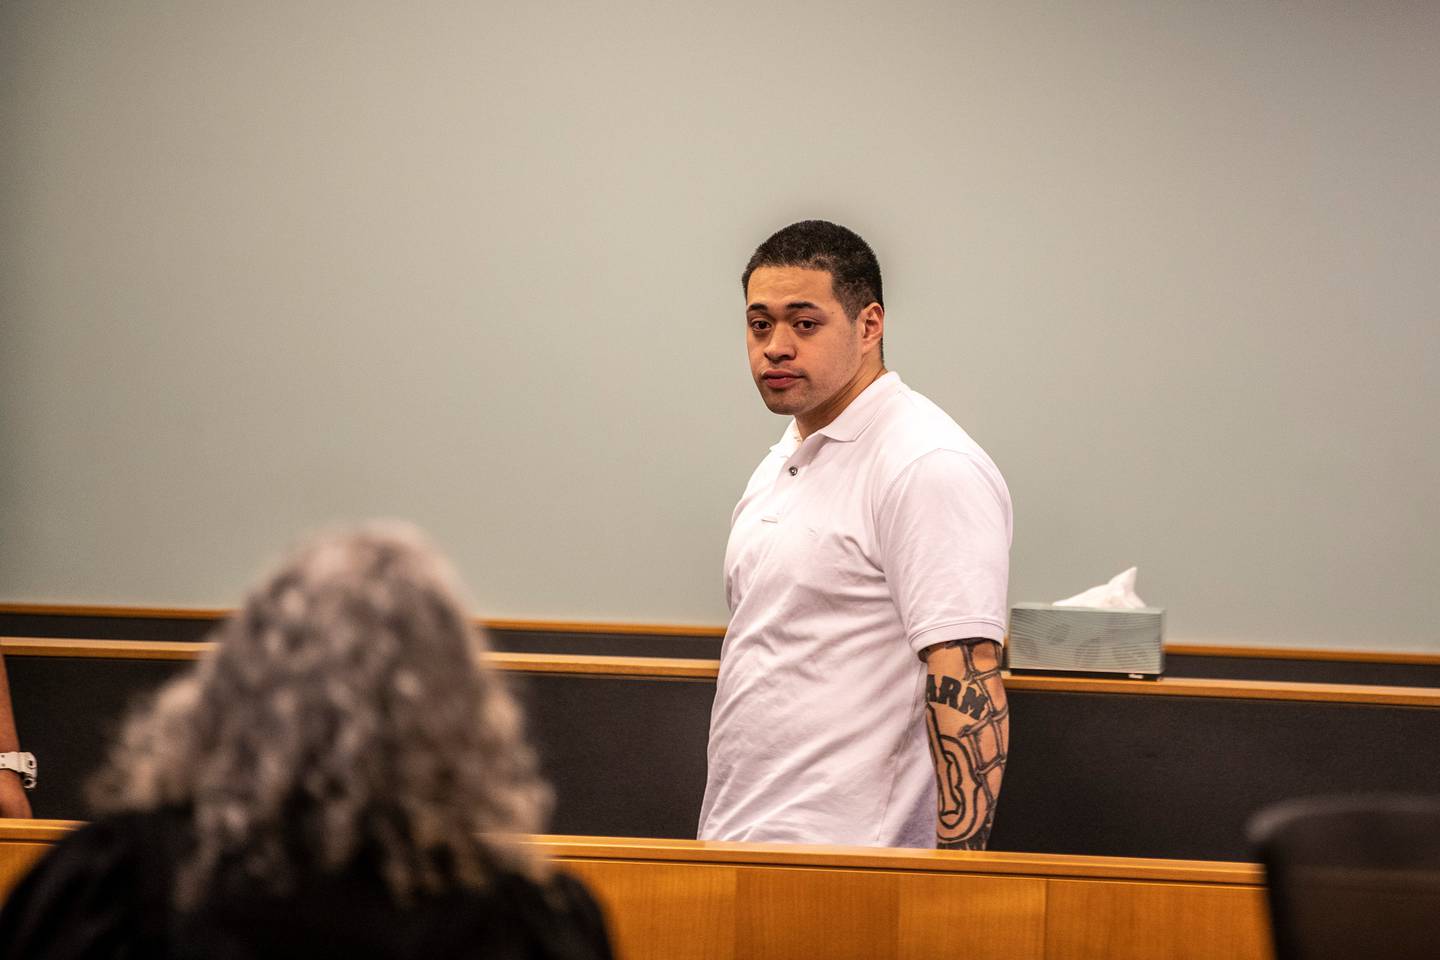 Paul Simon Tuliloa is one of three men who has pleaded not guilty to murdering Blake John Lee. Photo / Michael Craig